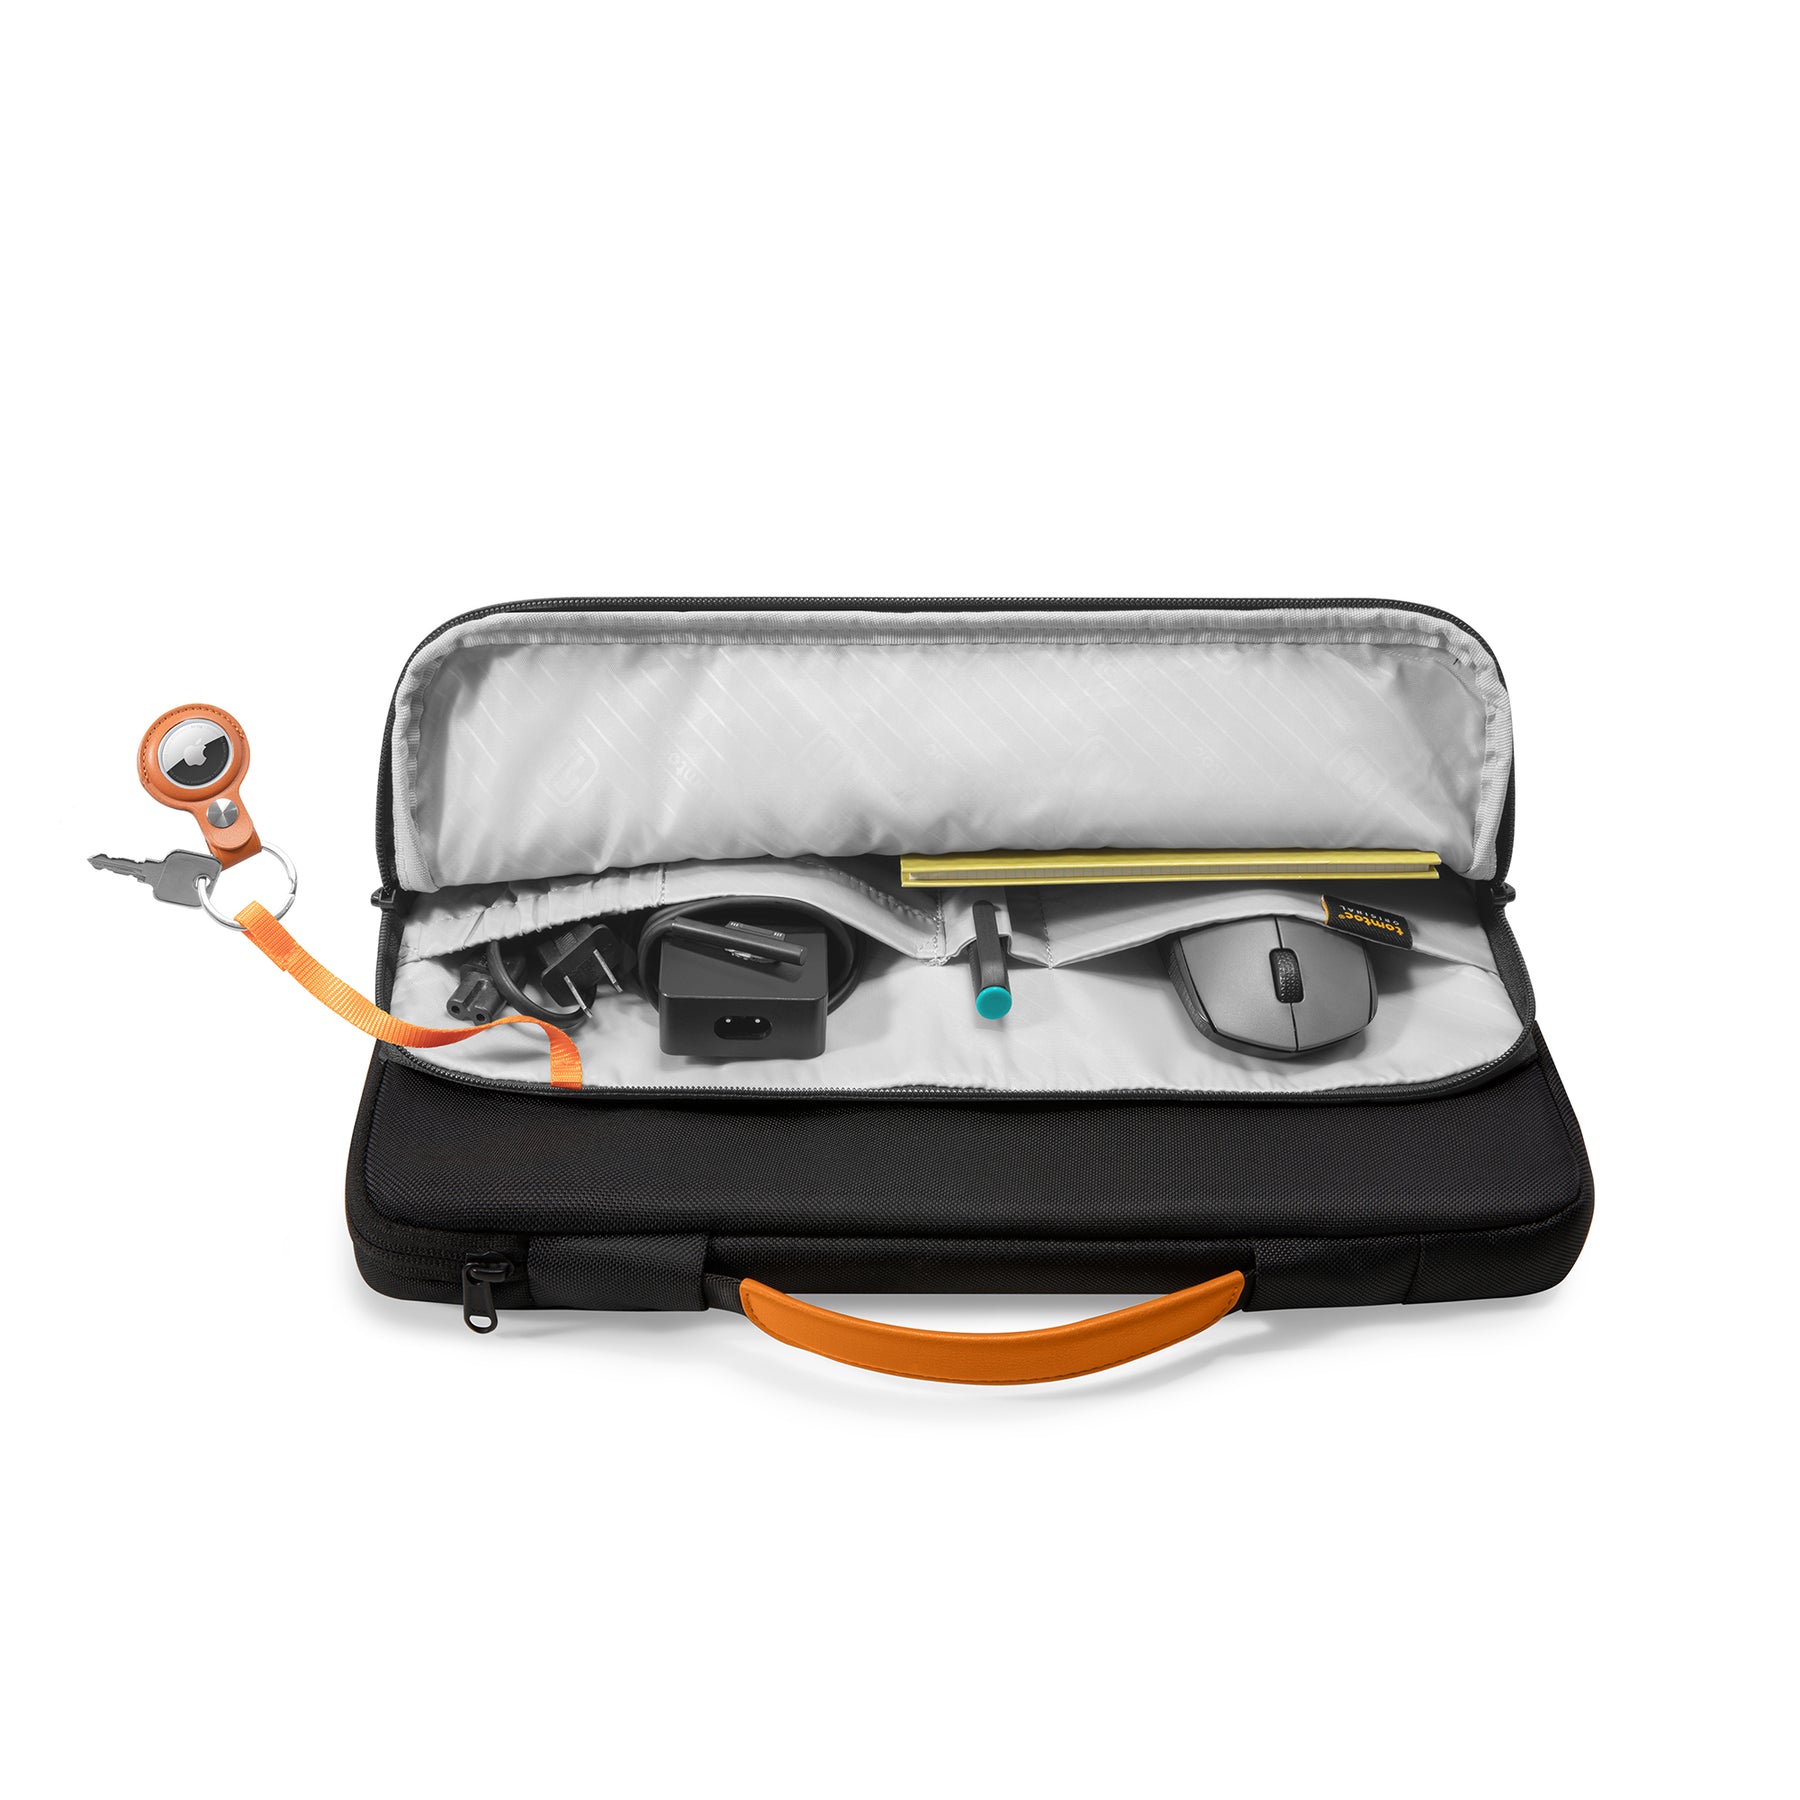 tomtoc 14 Inch Versatile 360 Protective Laptop Sleeve Briefcase - Black